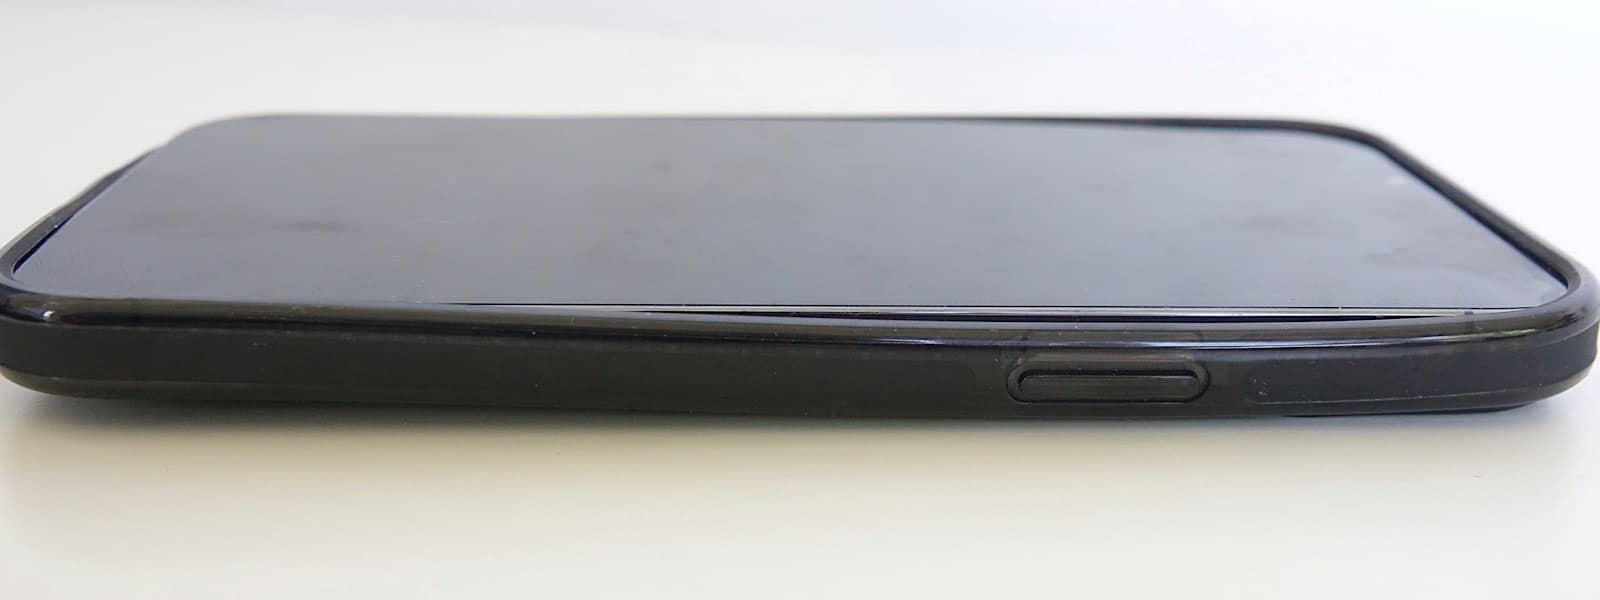 iPhone 12 Pro Max 手机壳不太适合 13 Pro Max，部分原因是更大的相机凸起。